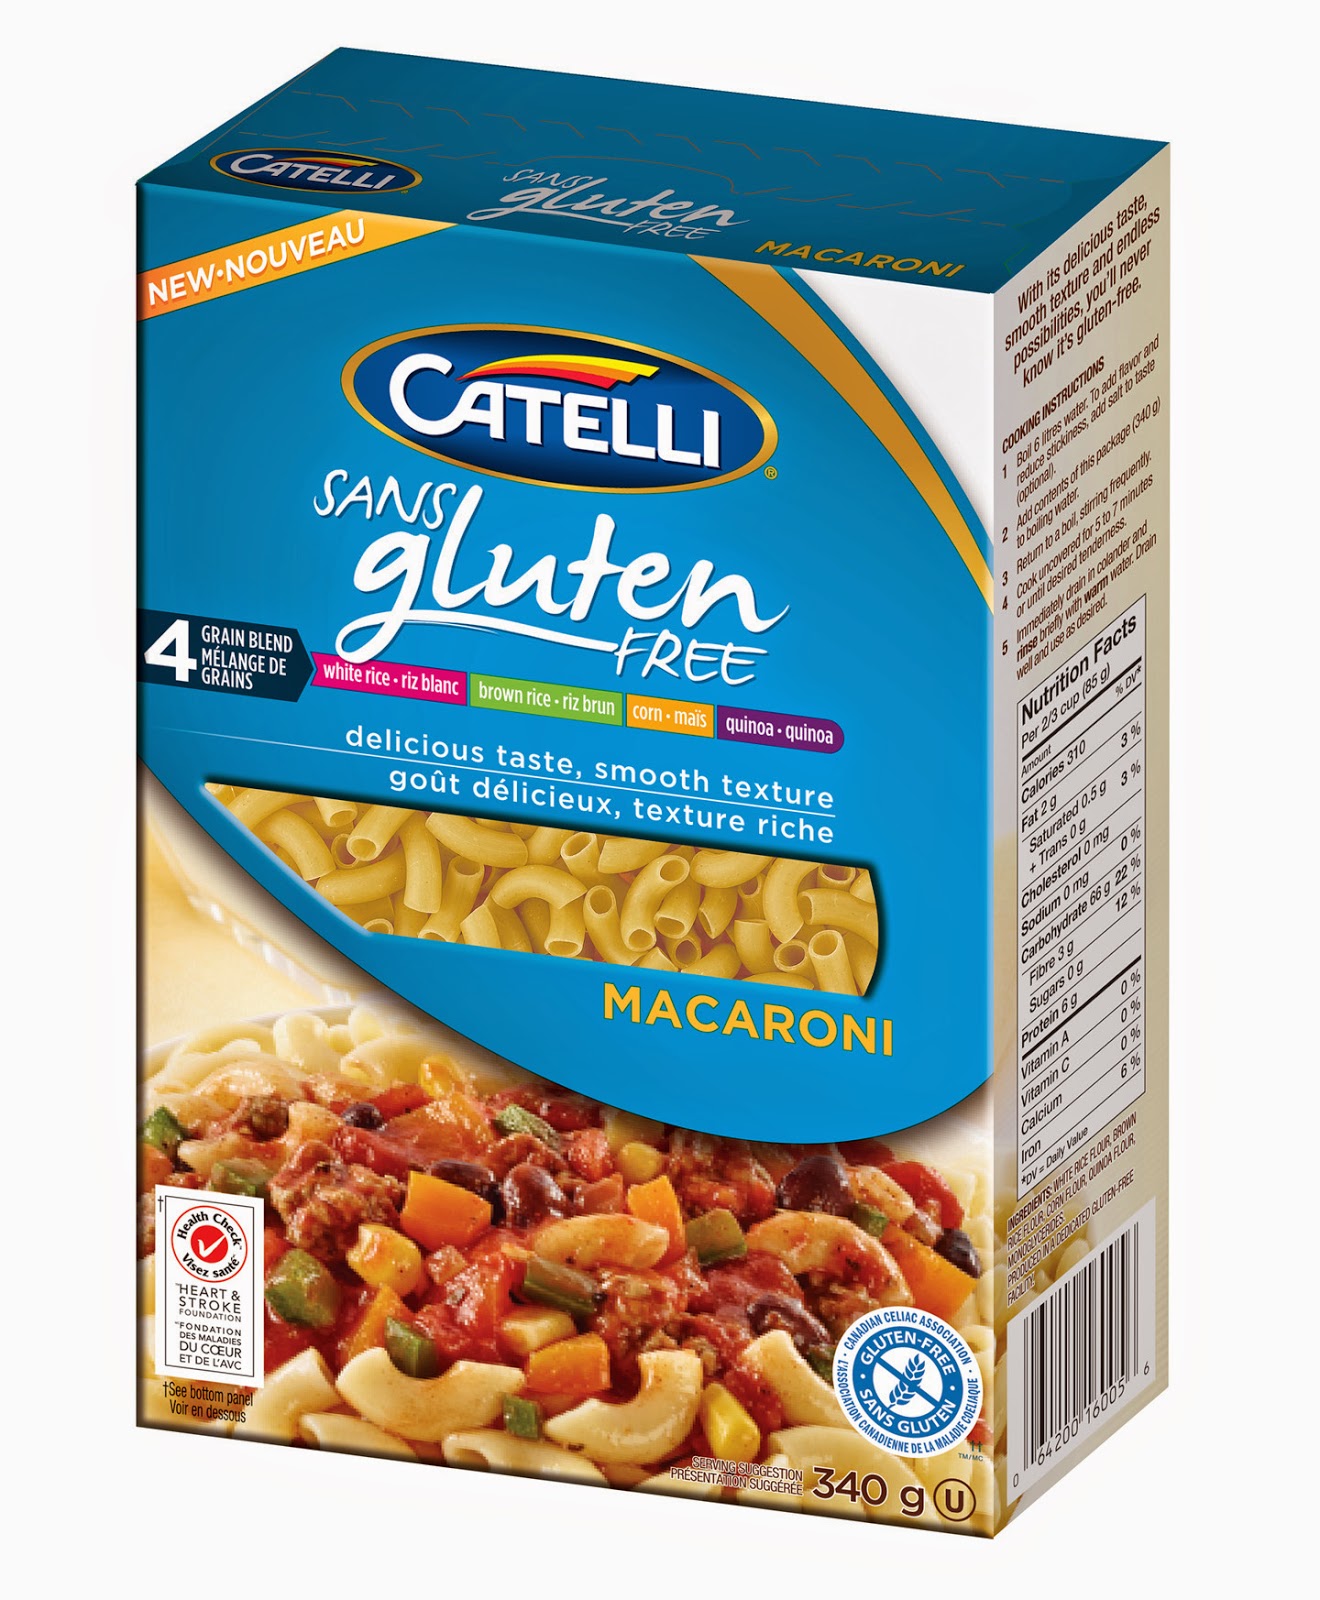 Celiac Baby!: Win a Year's Supply of Catelli Gluten Free Pasta!